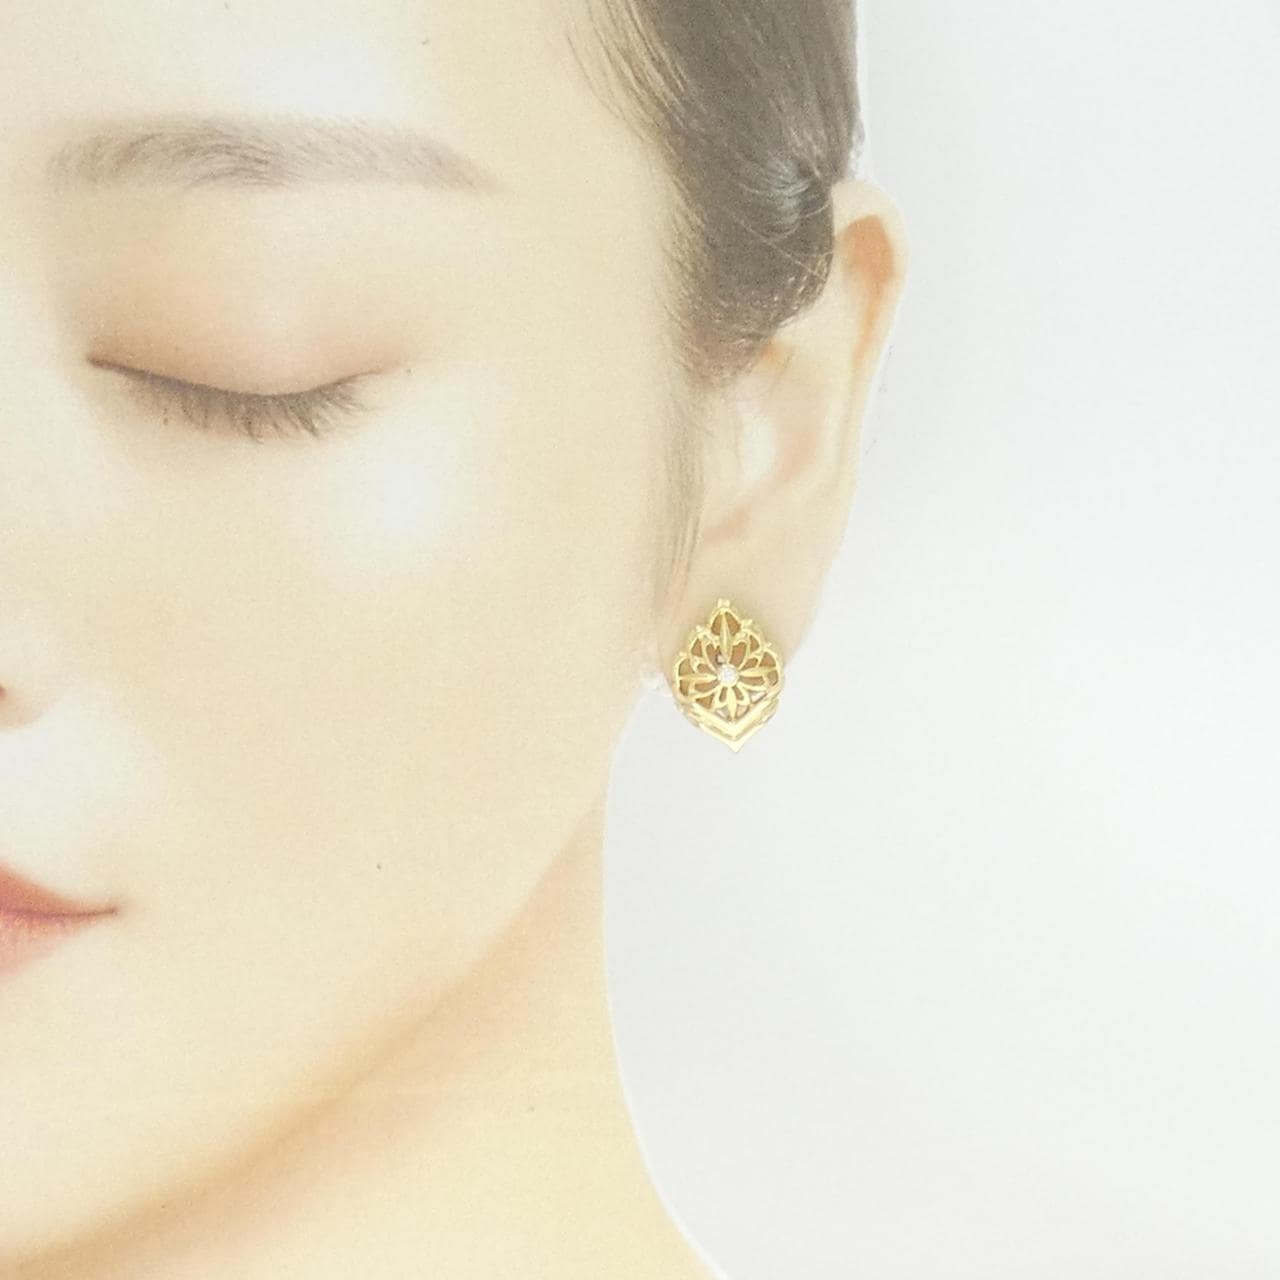 MIKIMOTO Diamond earrings